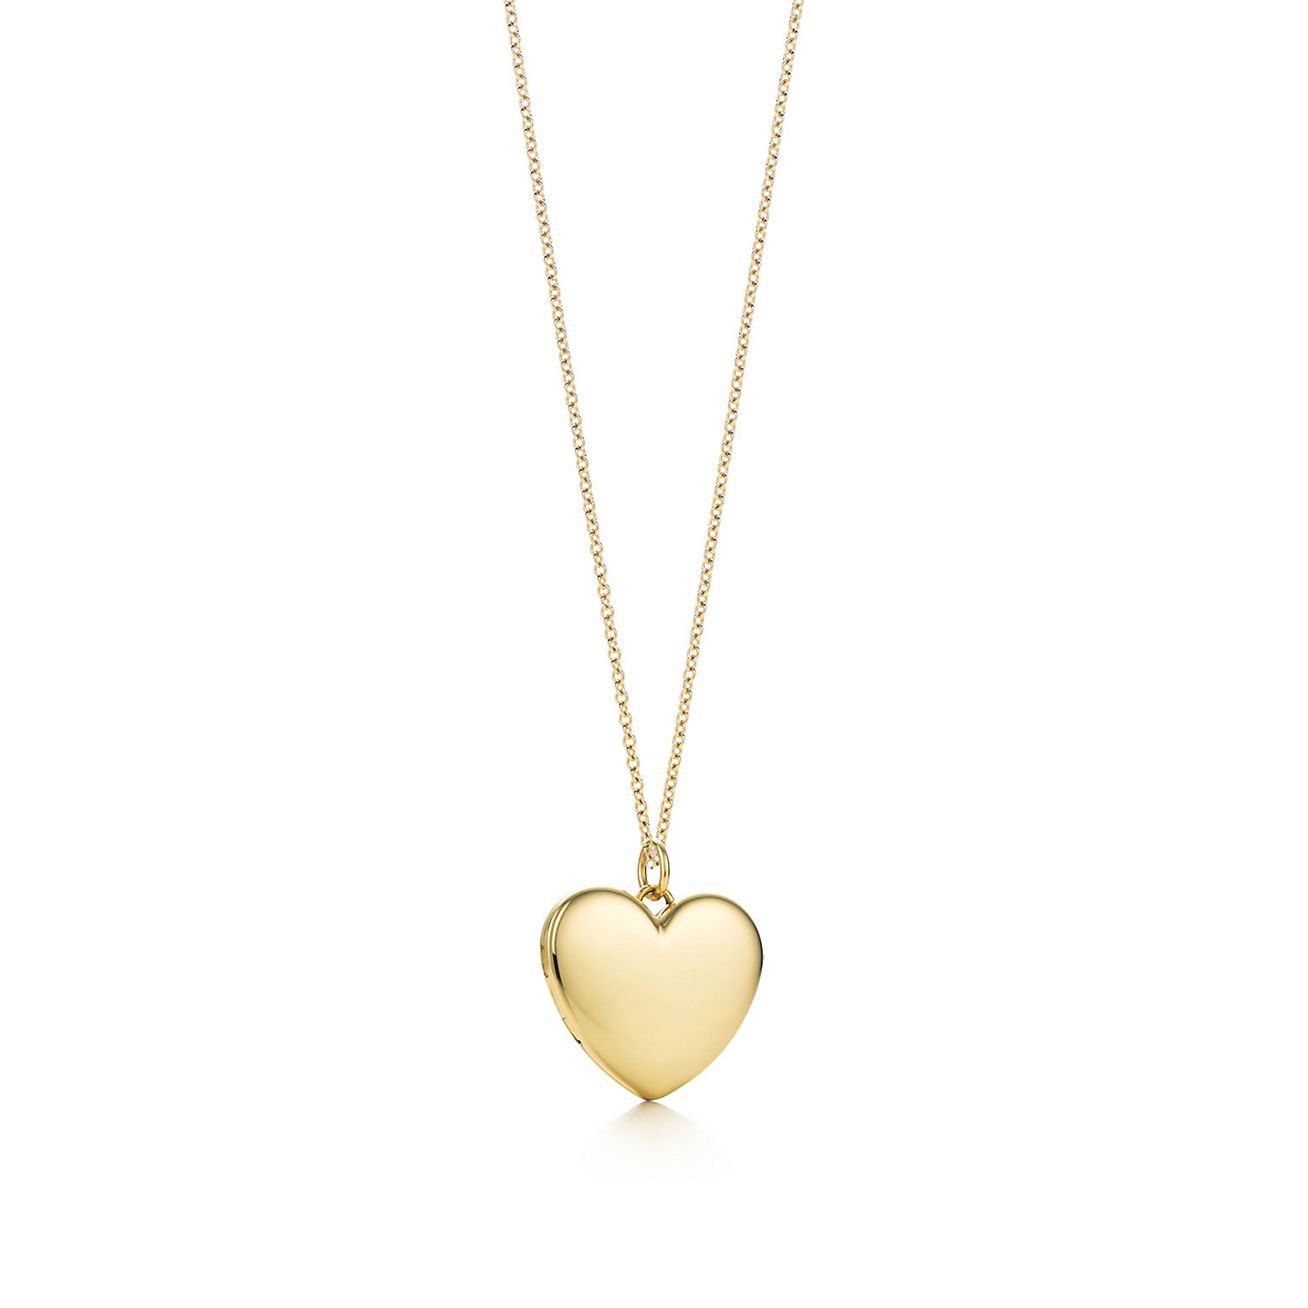 Gold Heart Necklace Sale Online, 52% OFF | www.ingeniovirtual.com